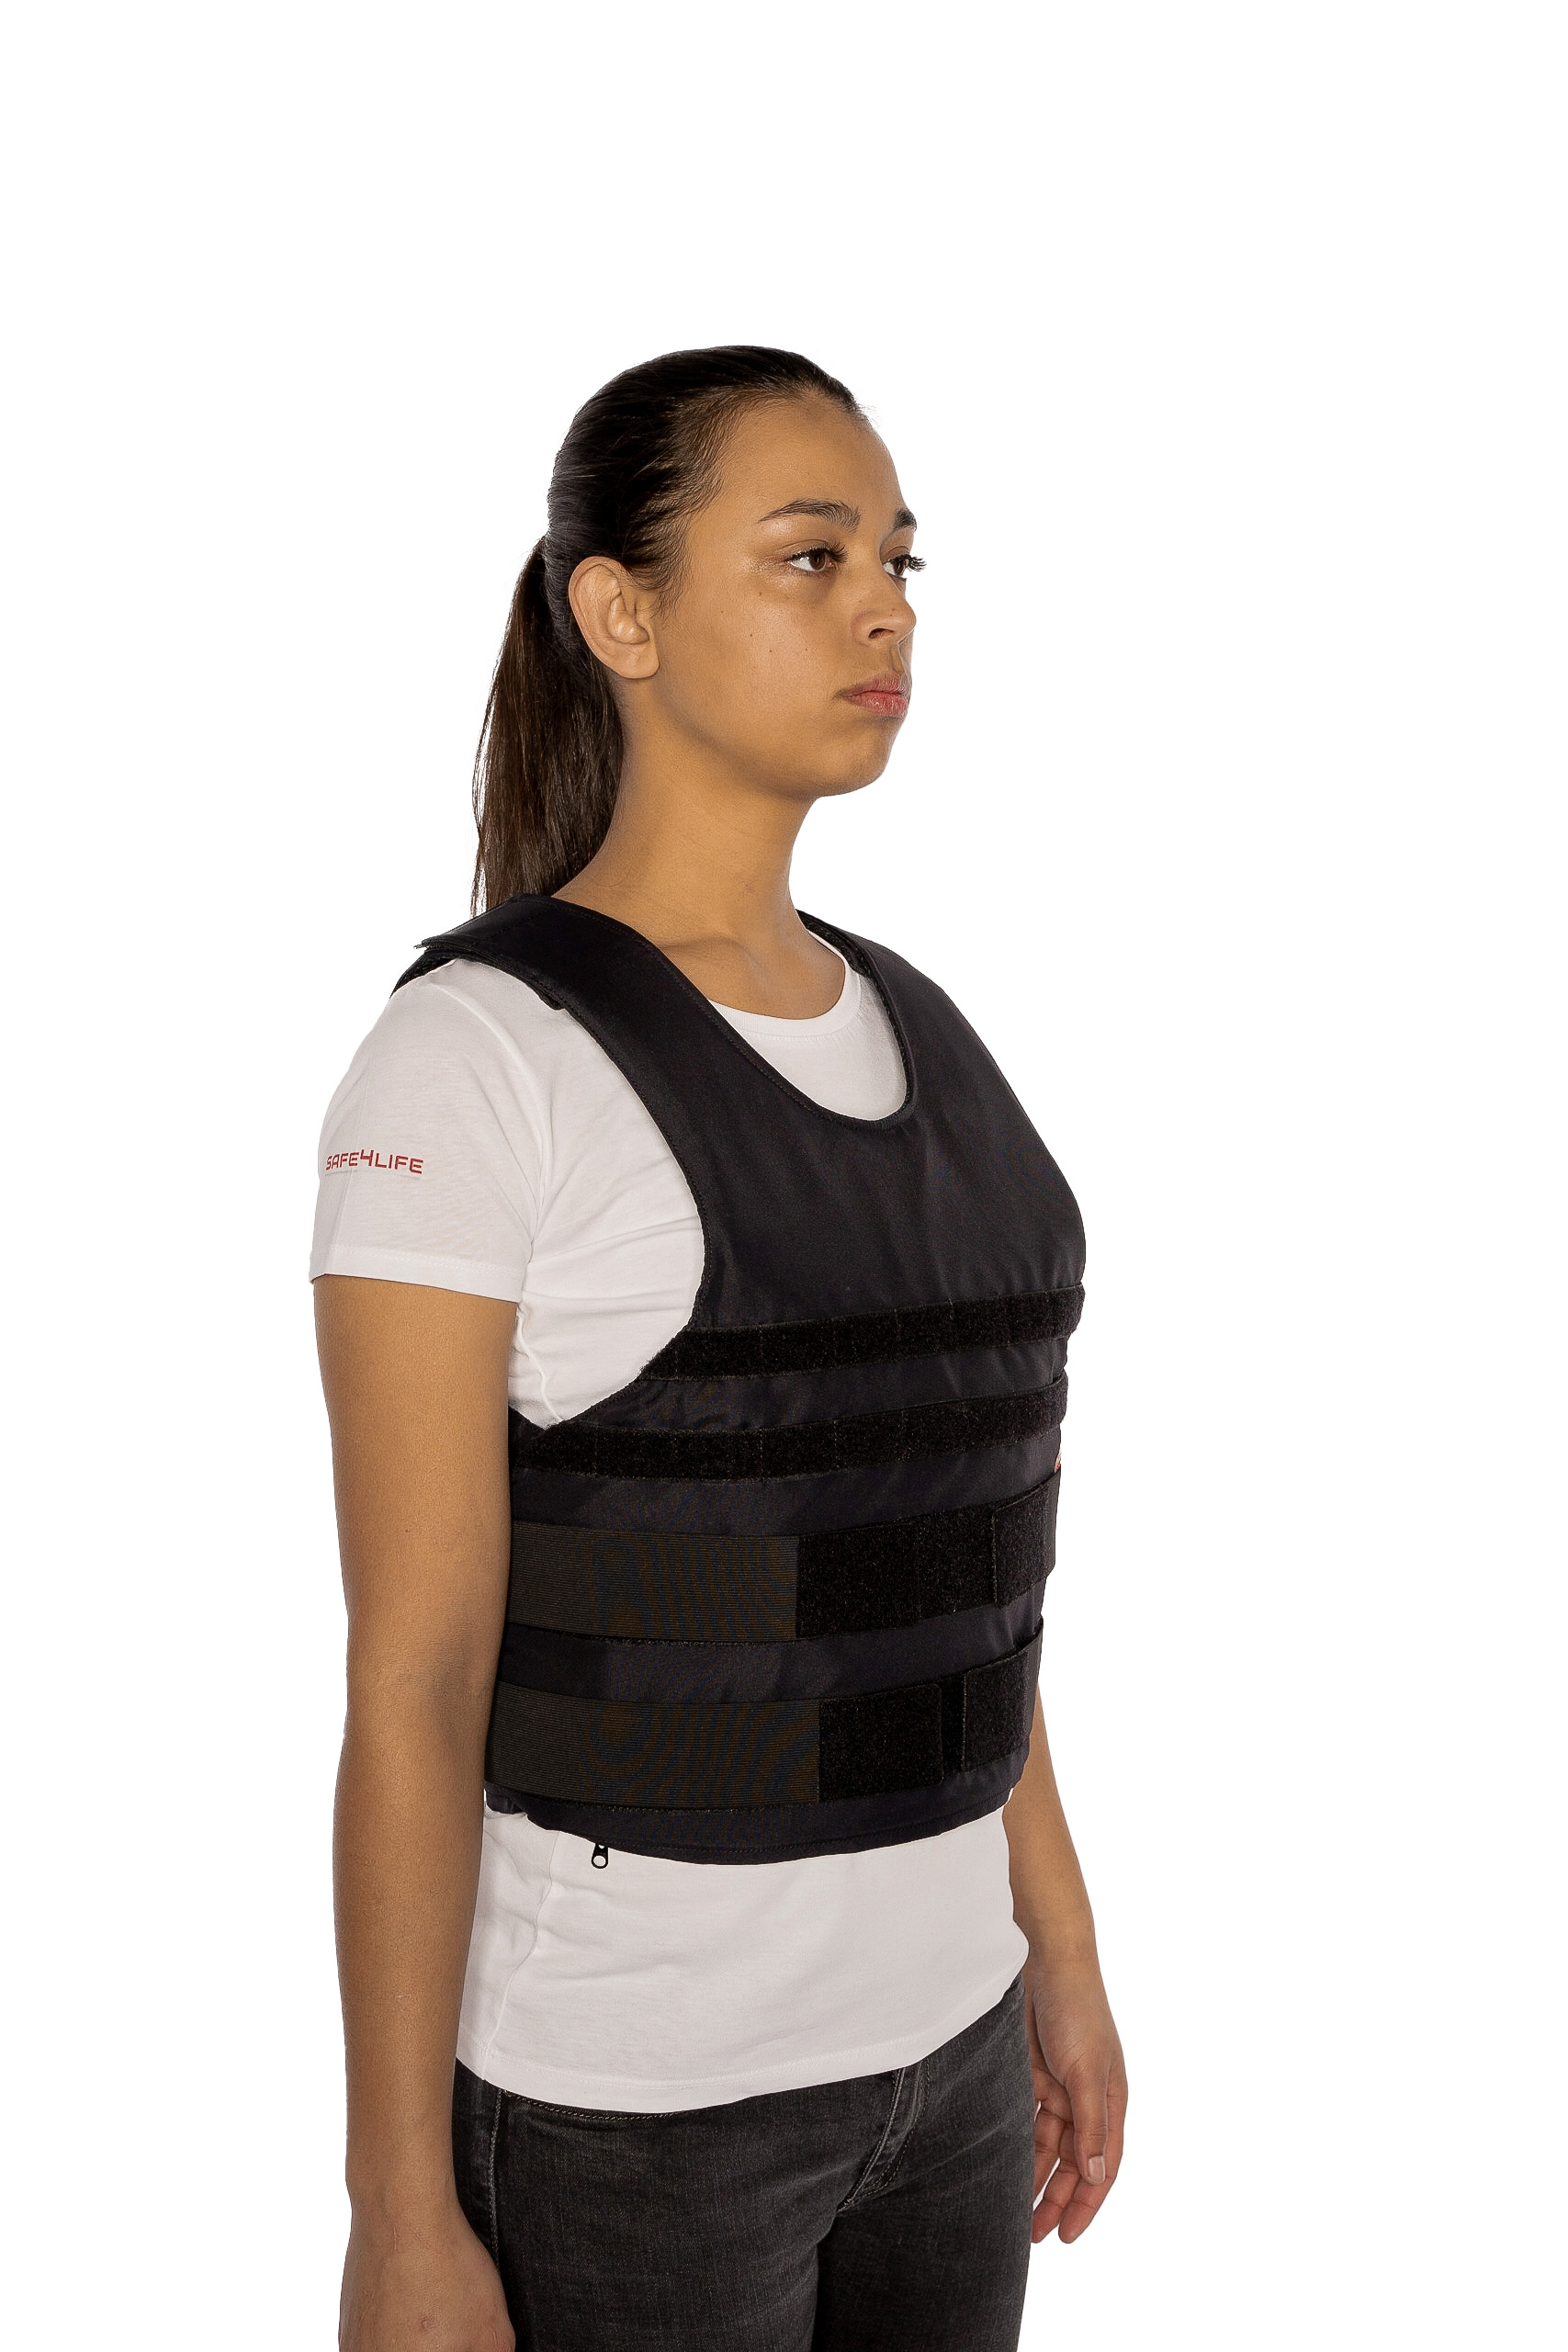 S4L -  Bullet resistant vest "Sara" 